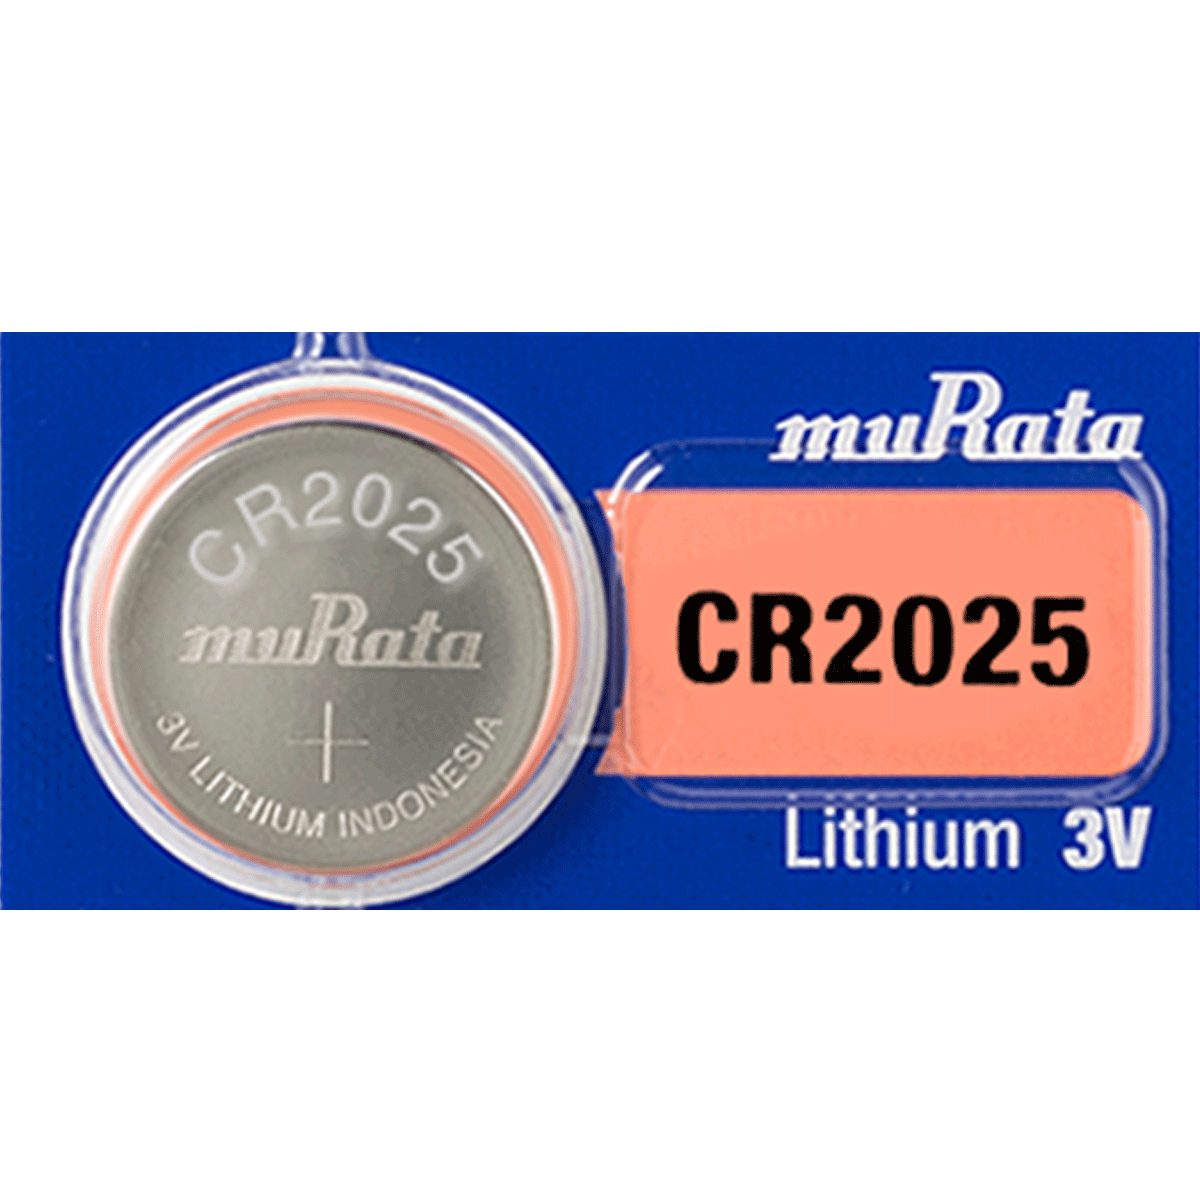 Duracell CR2032 Lithium Coin Cell Battery CR2025 CR2016 377 364 LR44 Batteries 